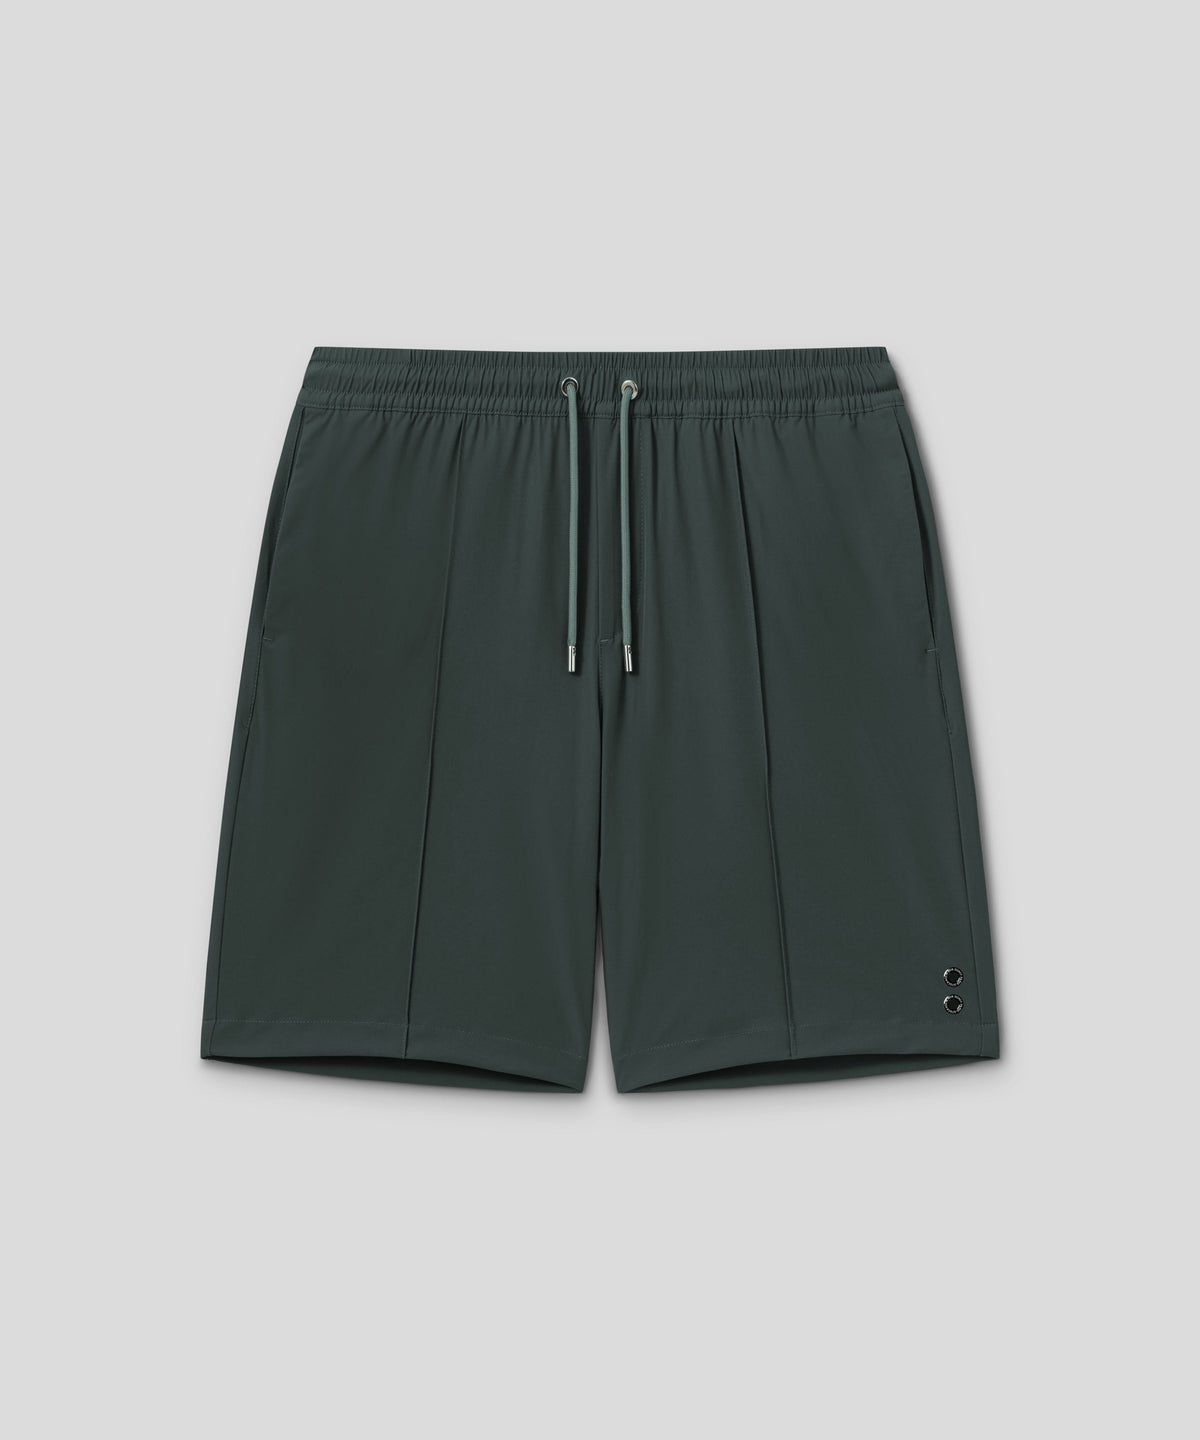 Light City Shorts: Dark Army Green